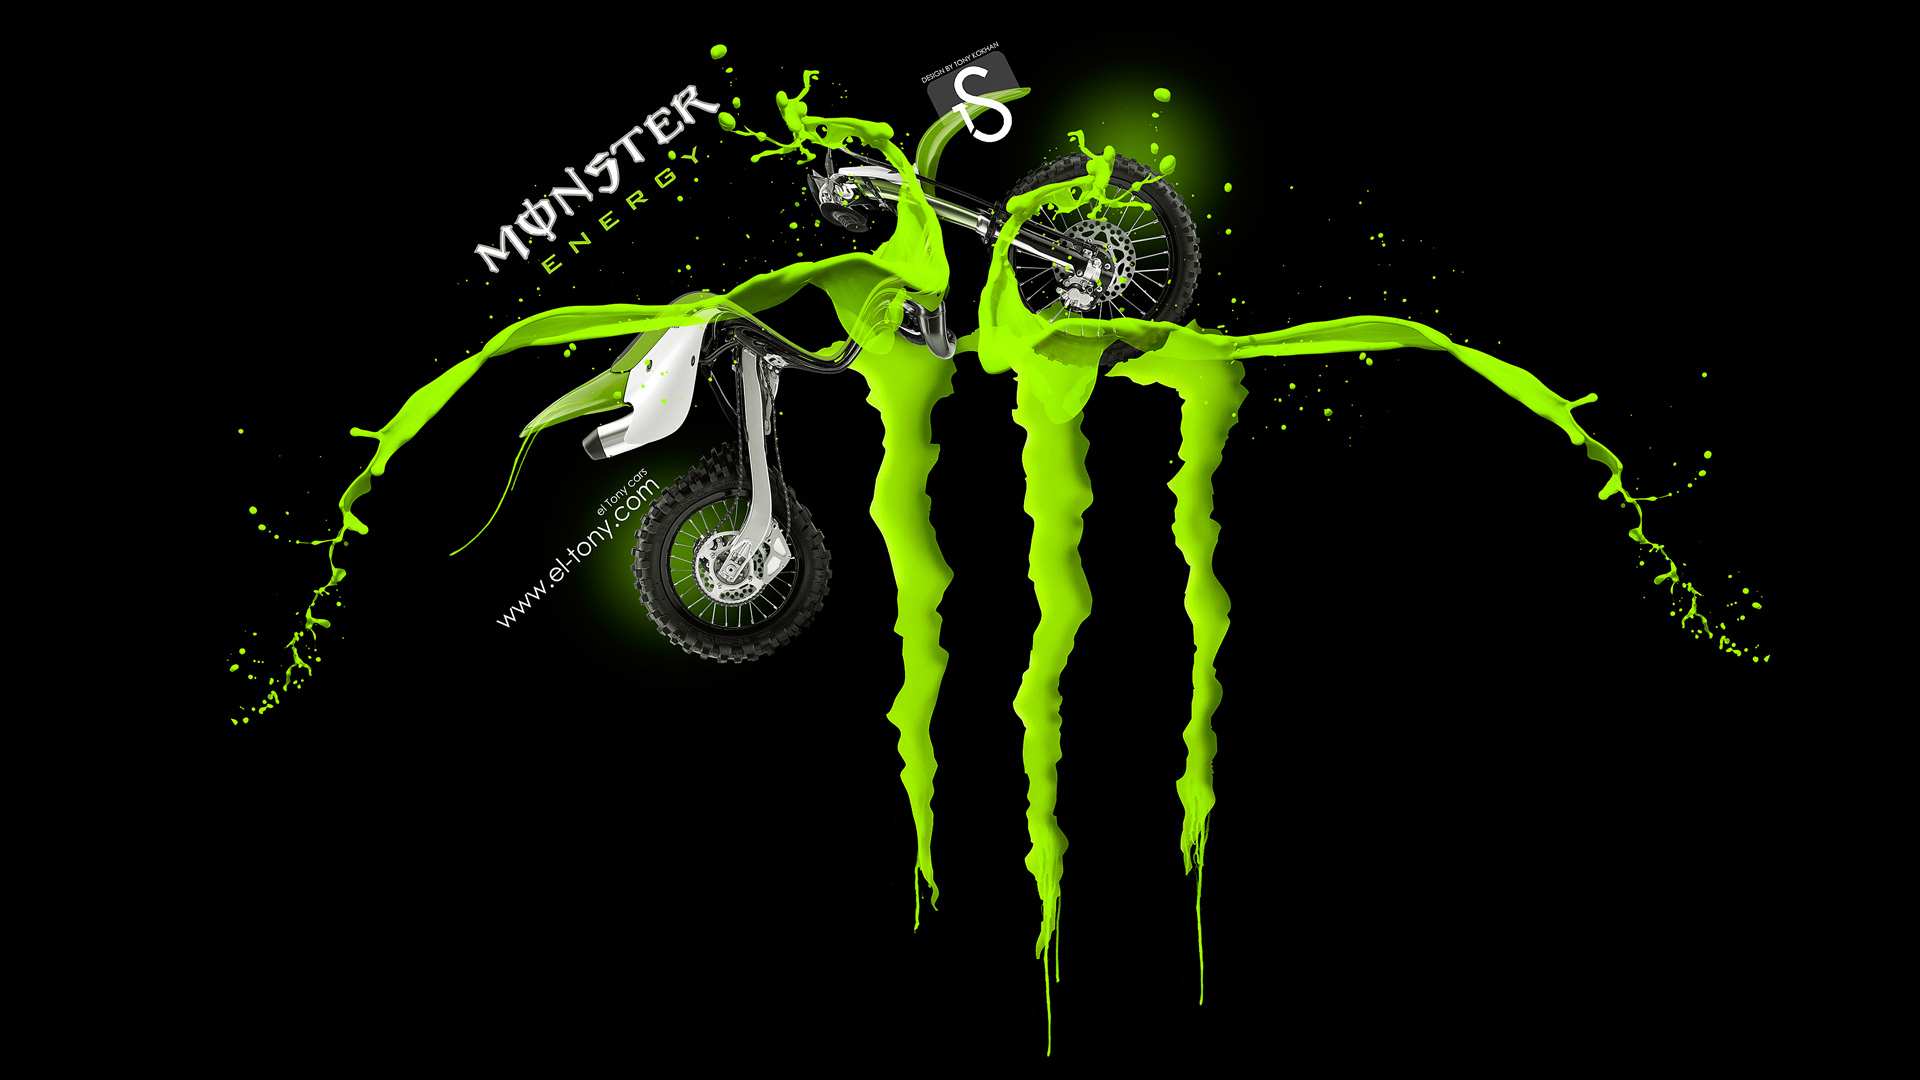 Dirt Bike Monster Energy Wallpaper HD High Resolution